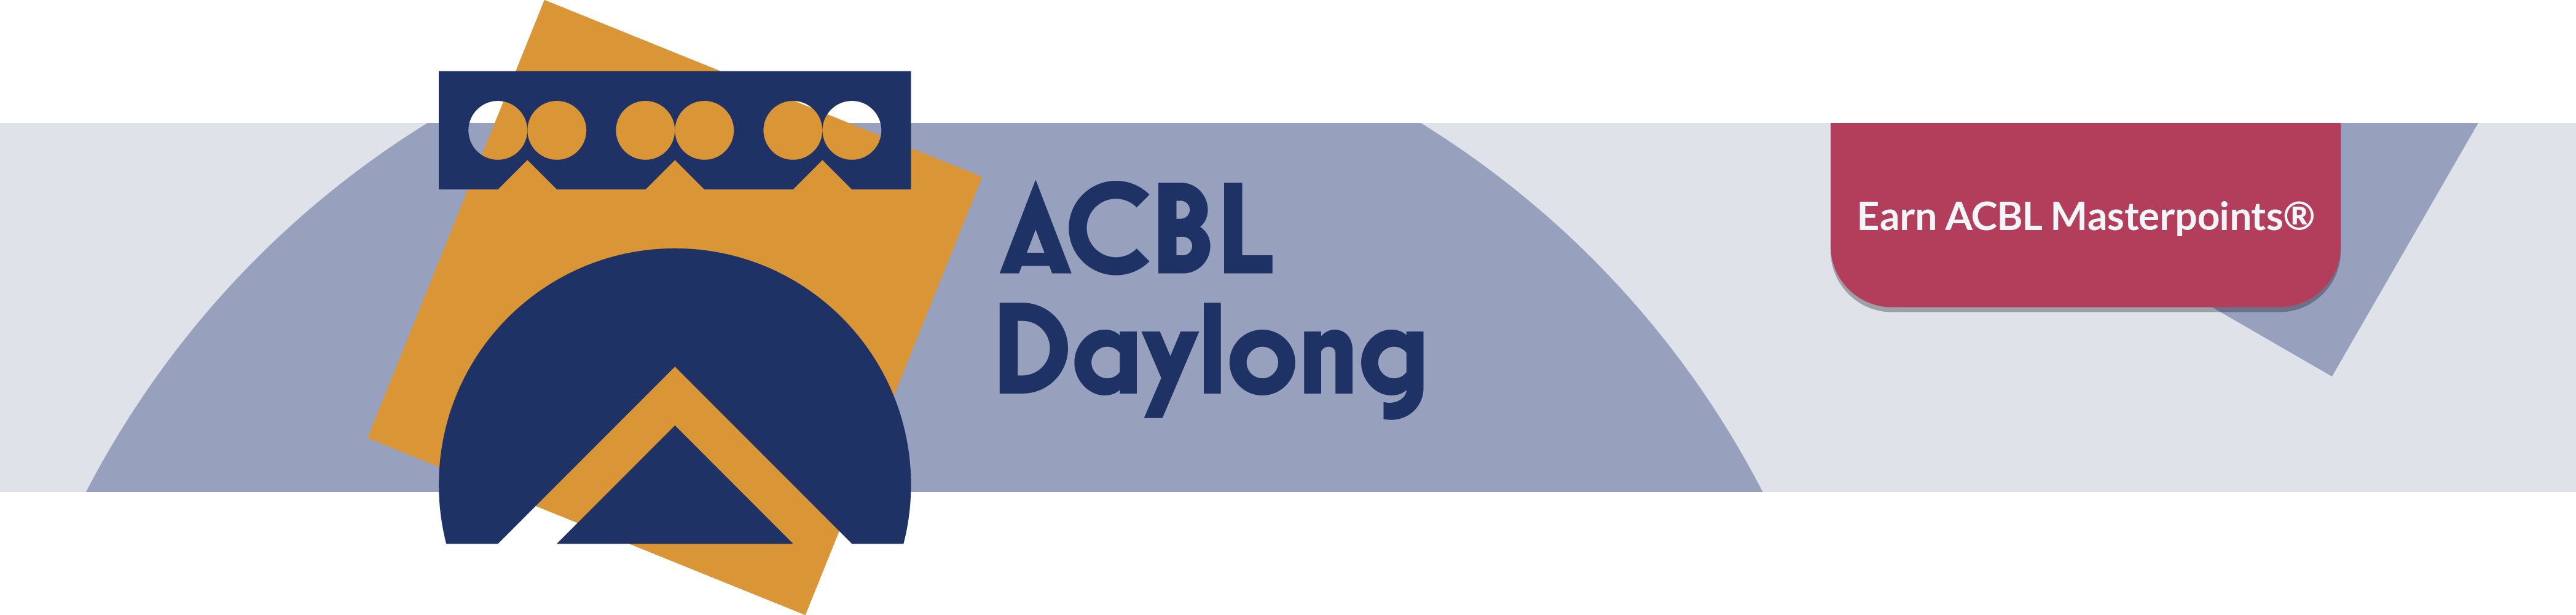 ACBL Daylong Tournaments BBO News